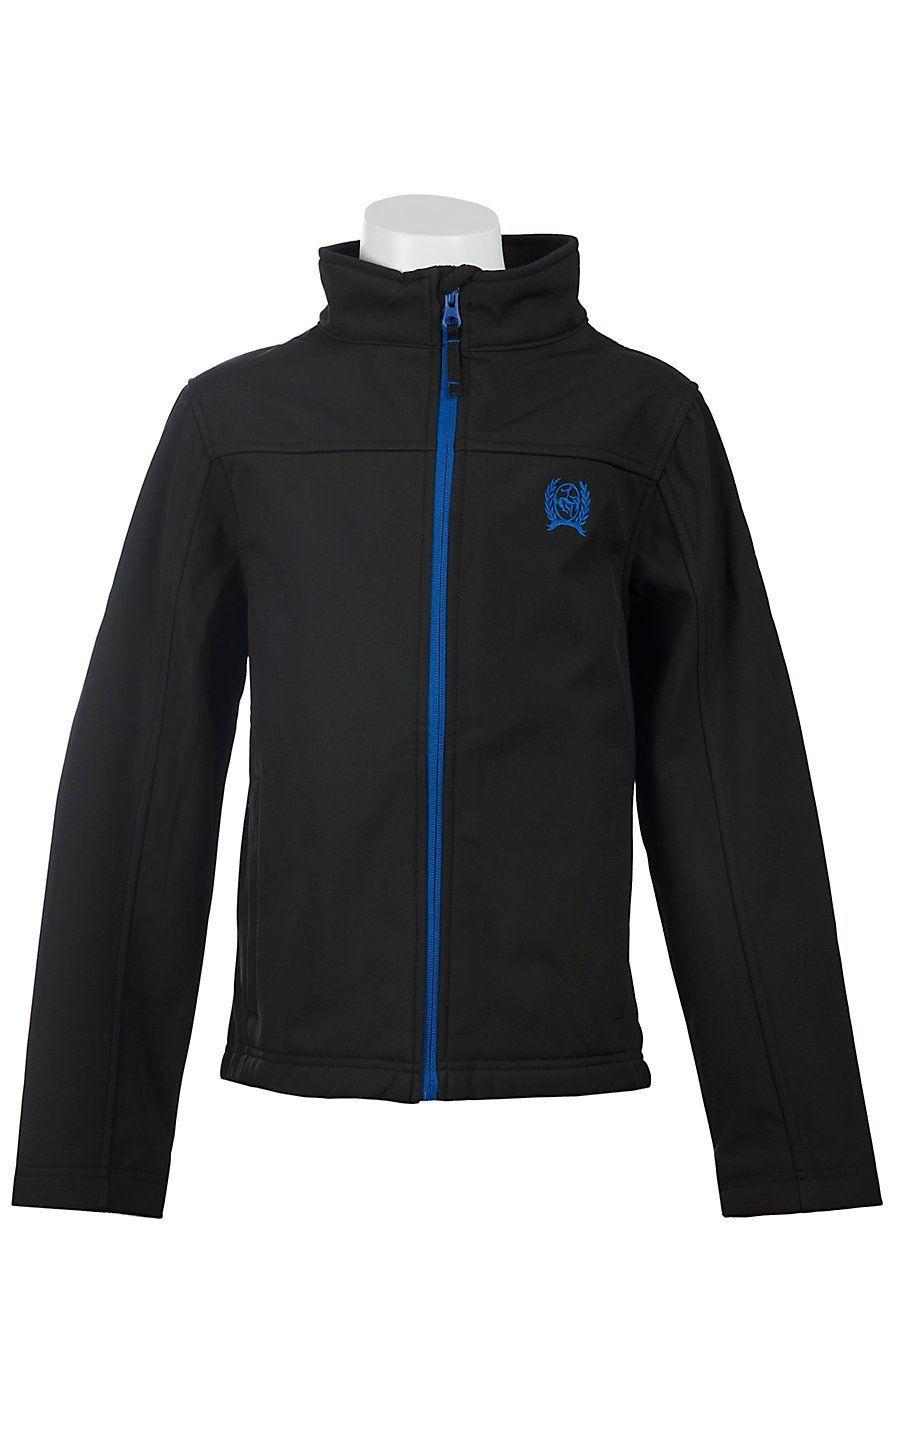 Western Clothing and Apparel Logo - Cinch® Boy's Black with Blue Logos Bonded Jacket J7440001